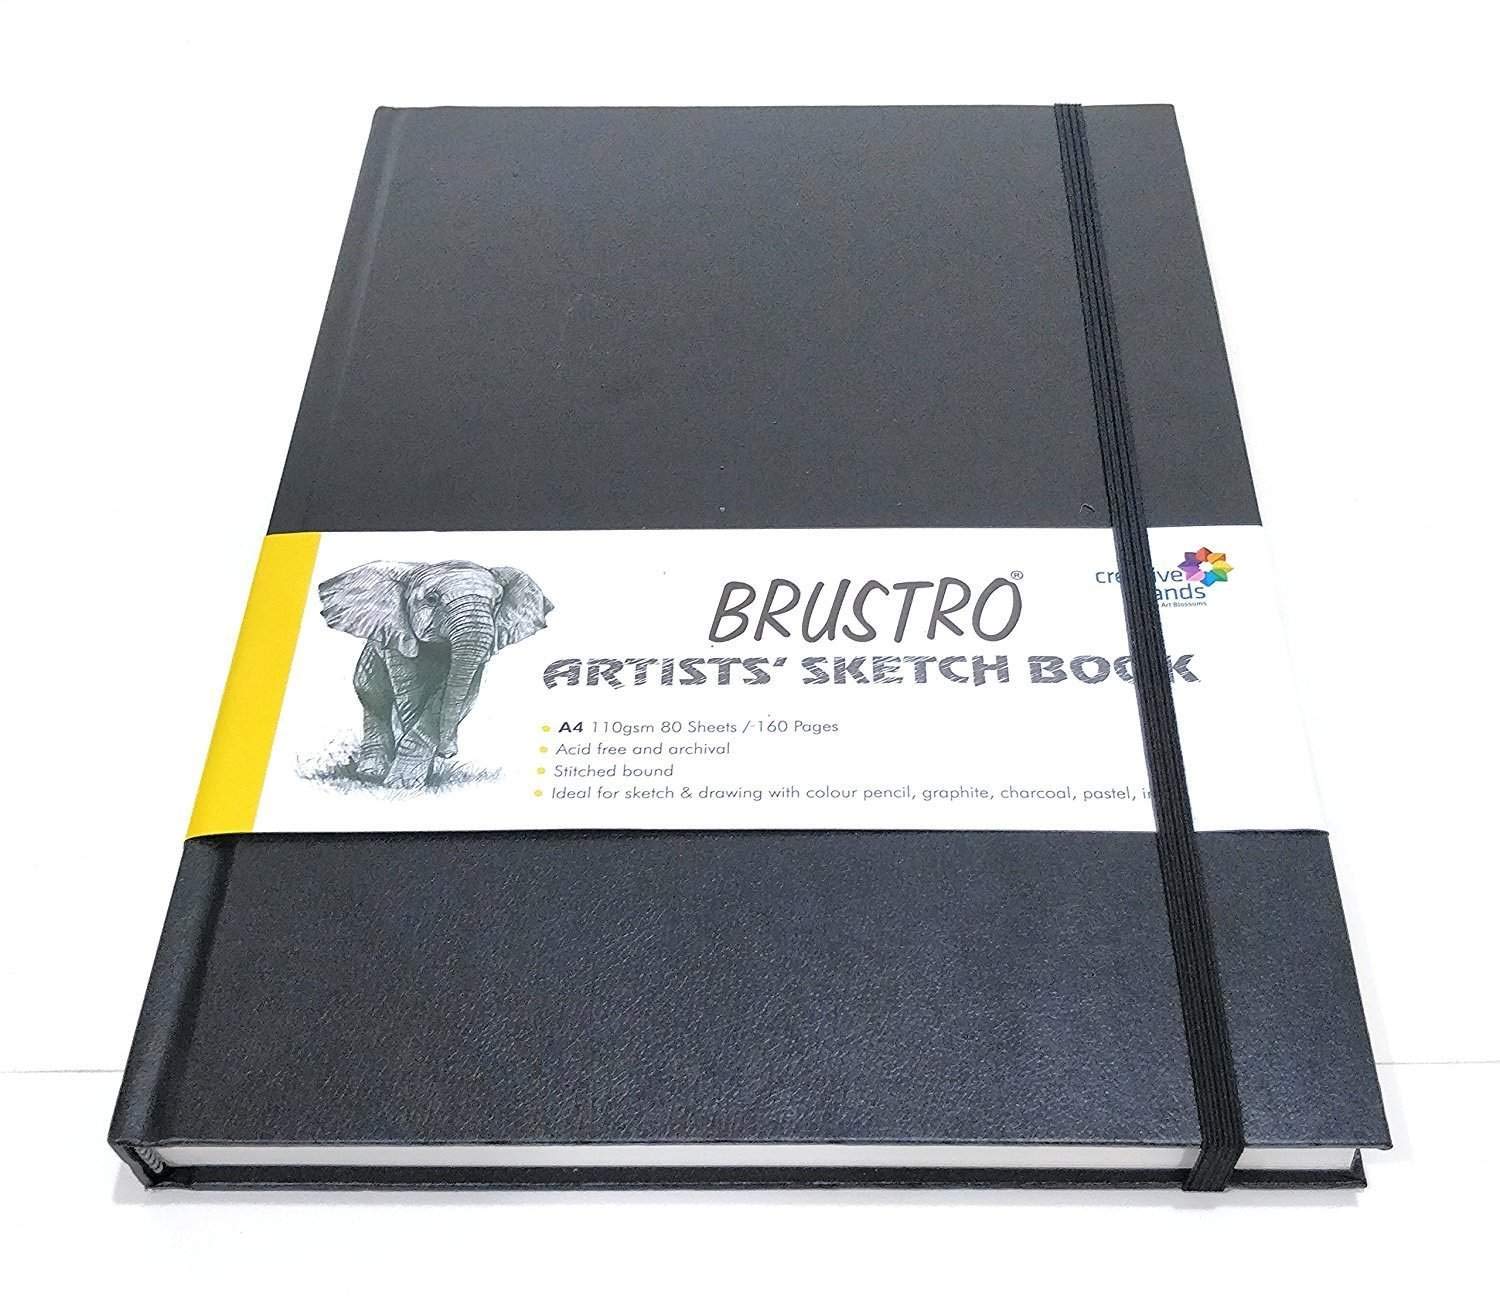 Brustro Artists Stitched Bound Sketch Book A4, 110 GSM (Acid Free